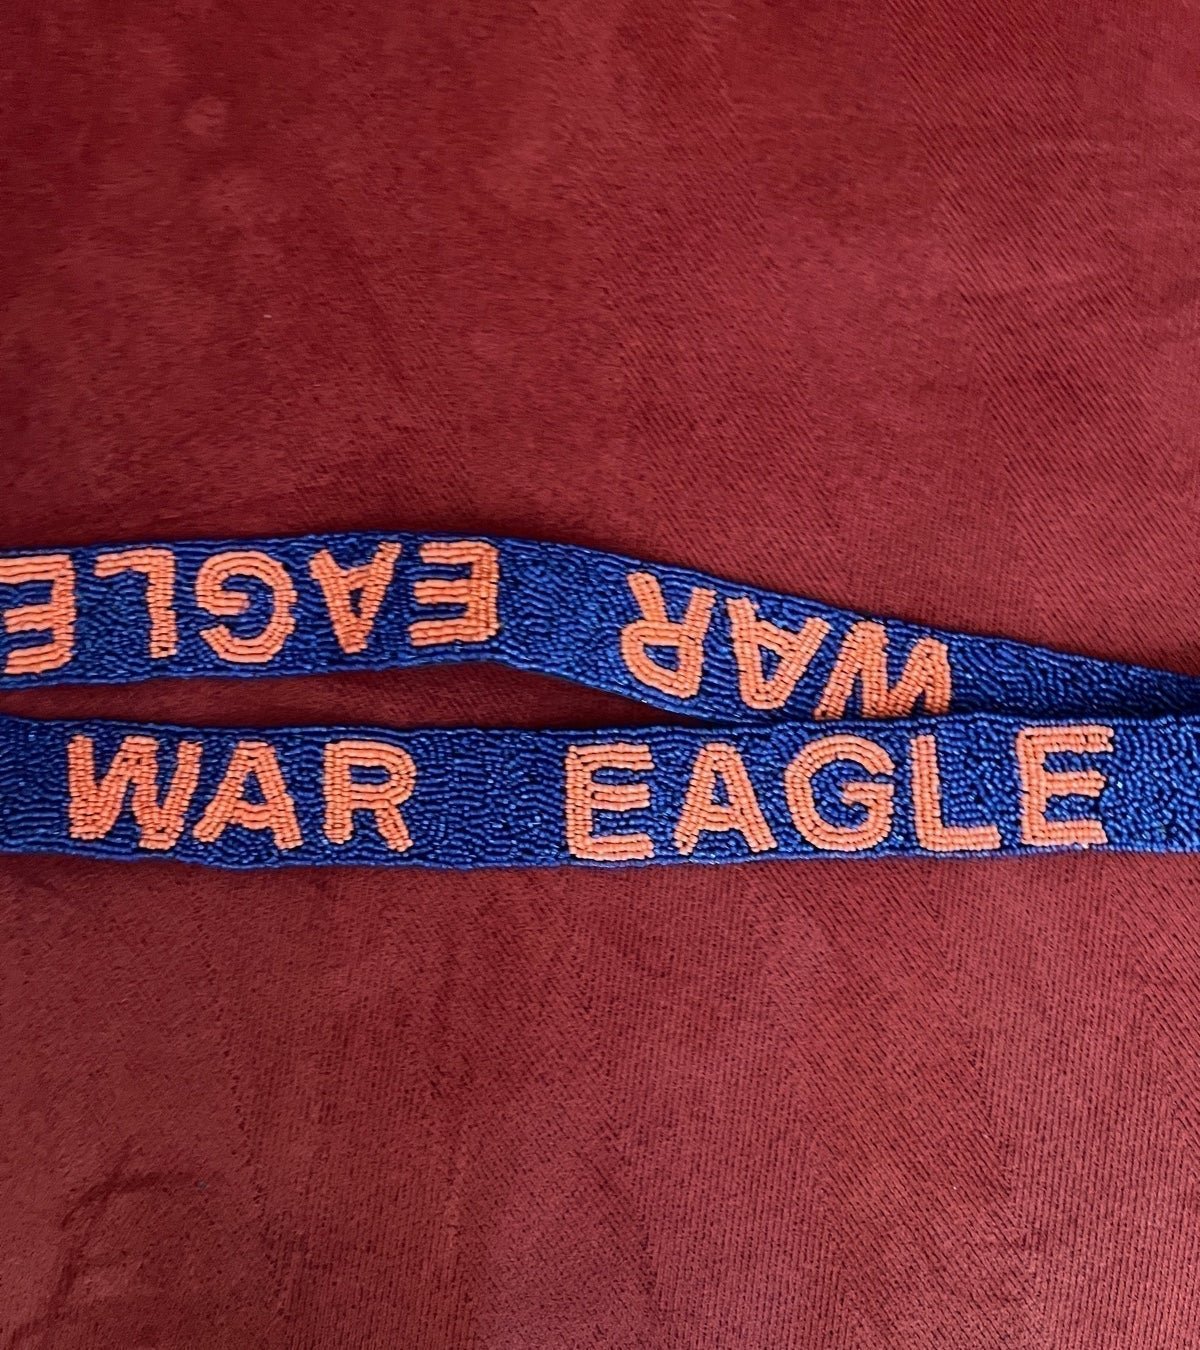 Nice War Eagle strap, beaded strap, War Eagle beaded Strap Hxfp8hF90 US Outlet